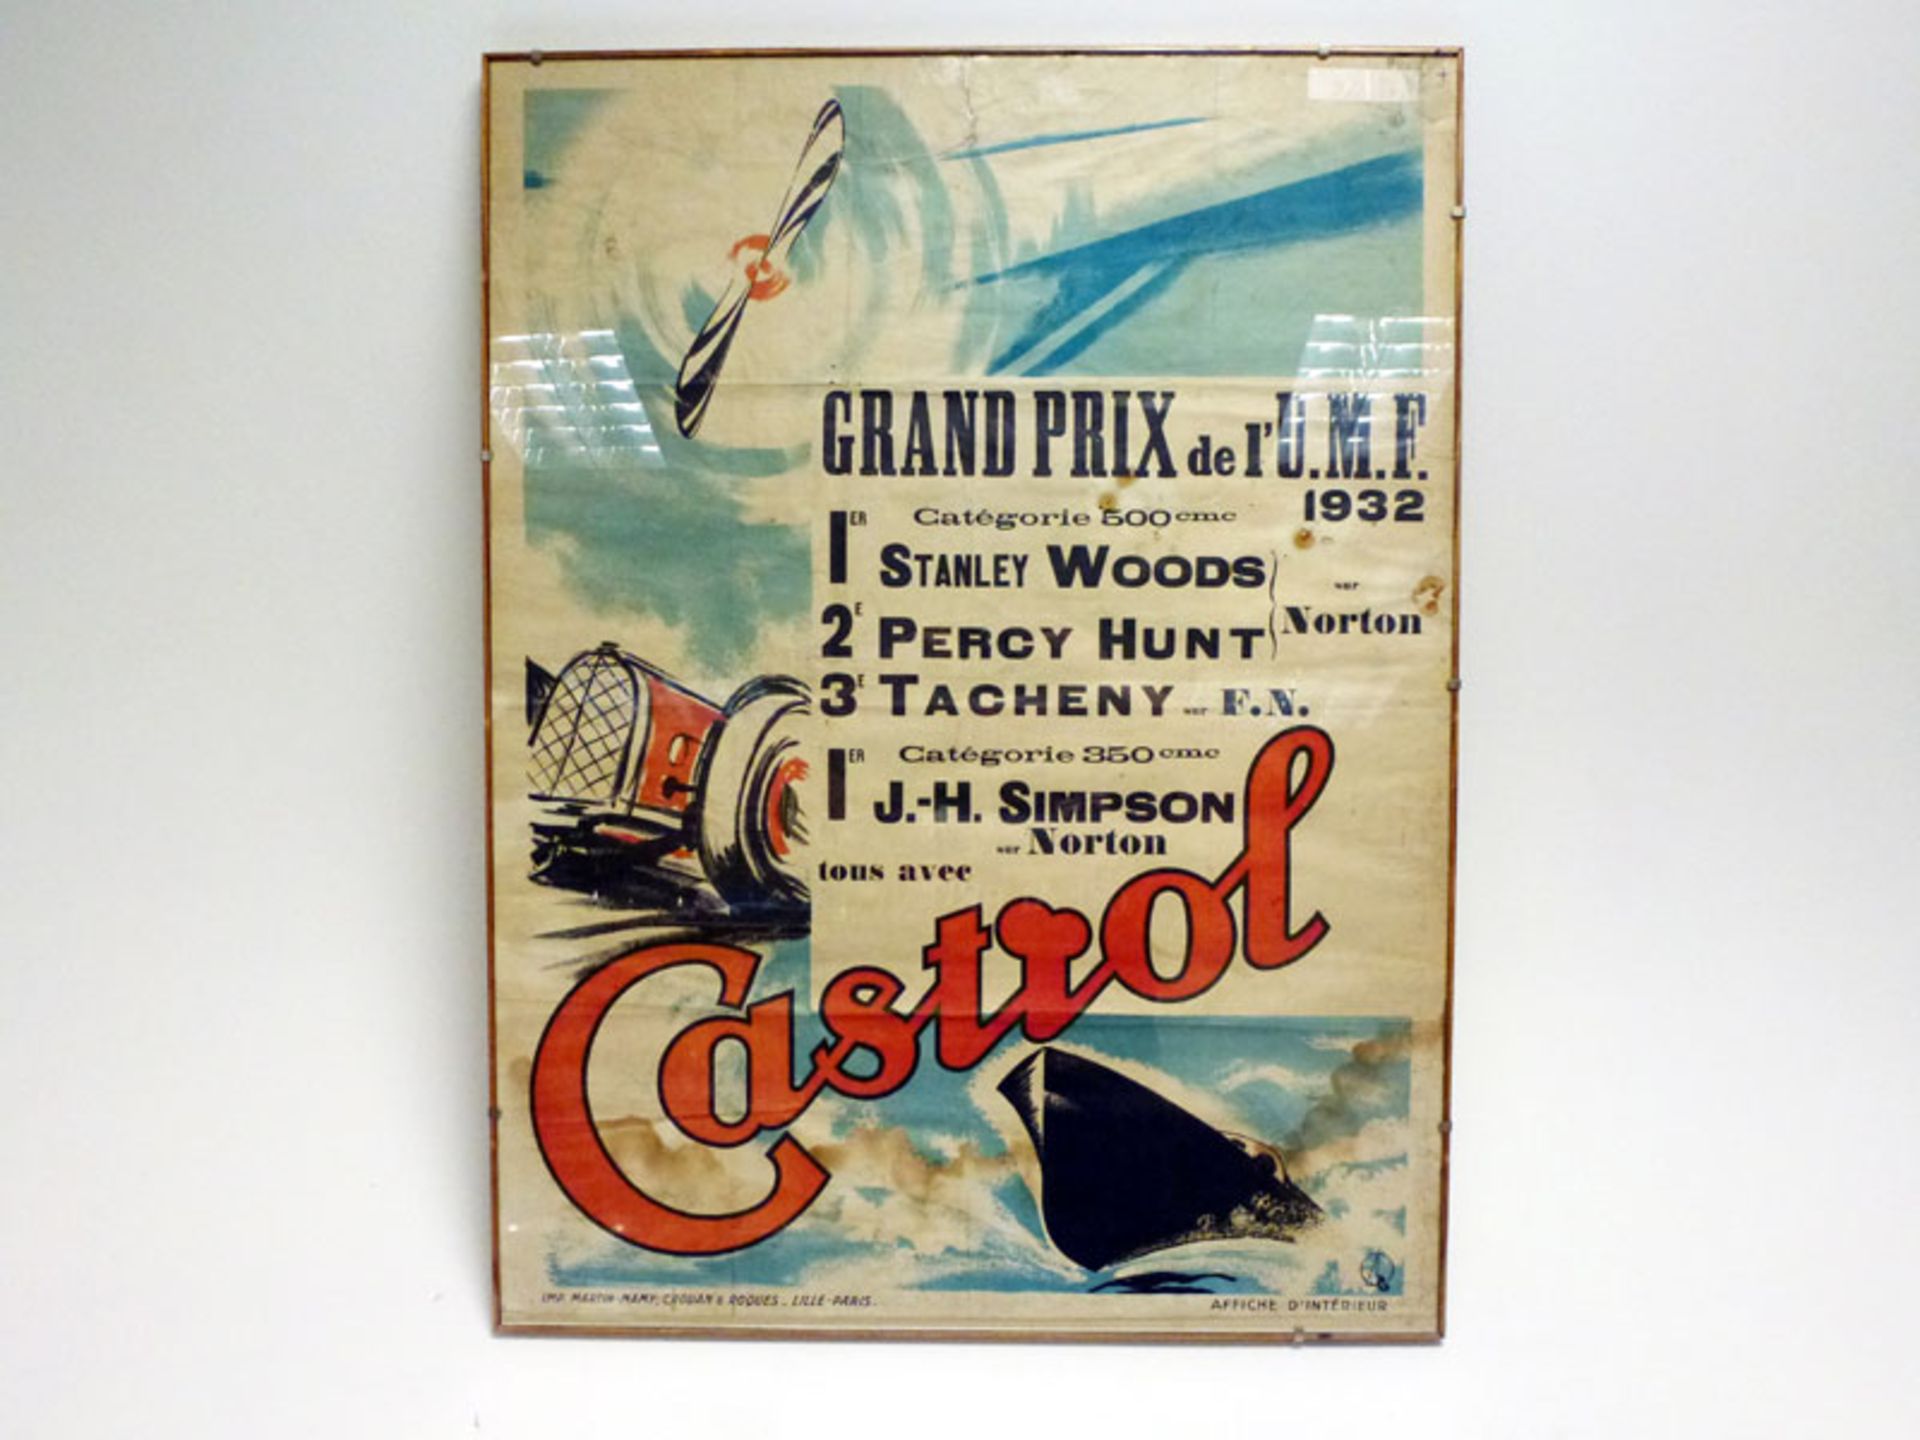 A Rare Original Castrol Oil Achievements Poster